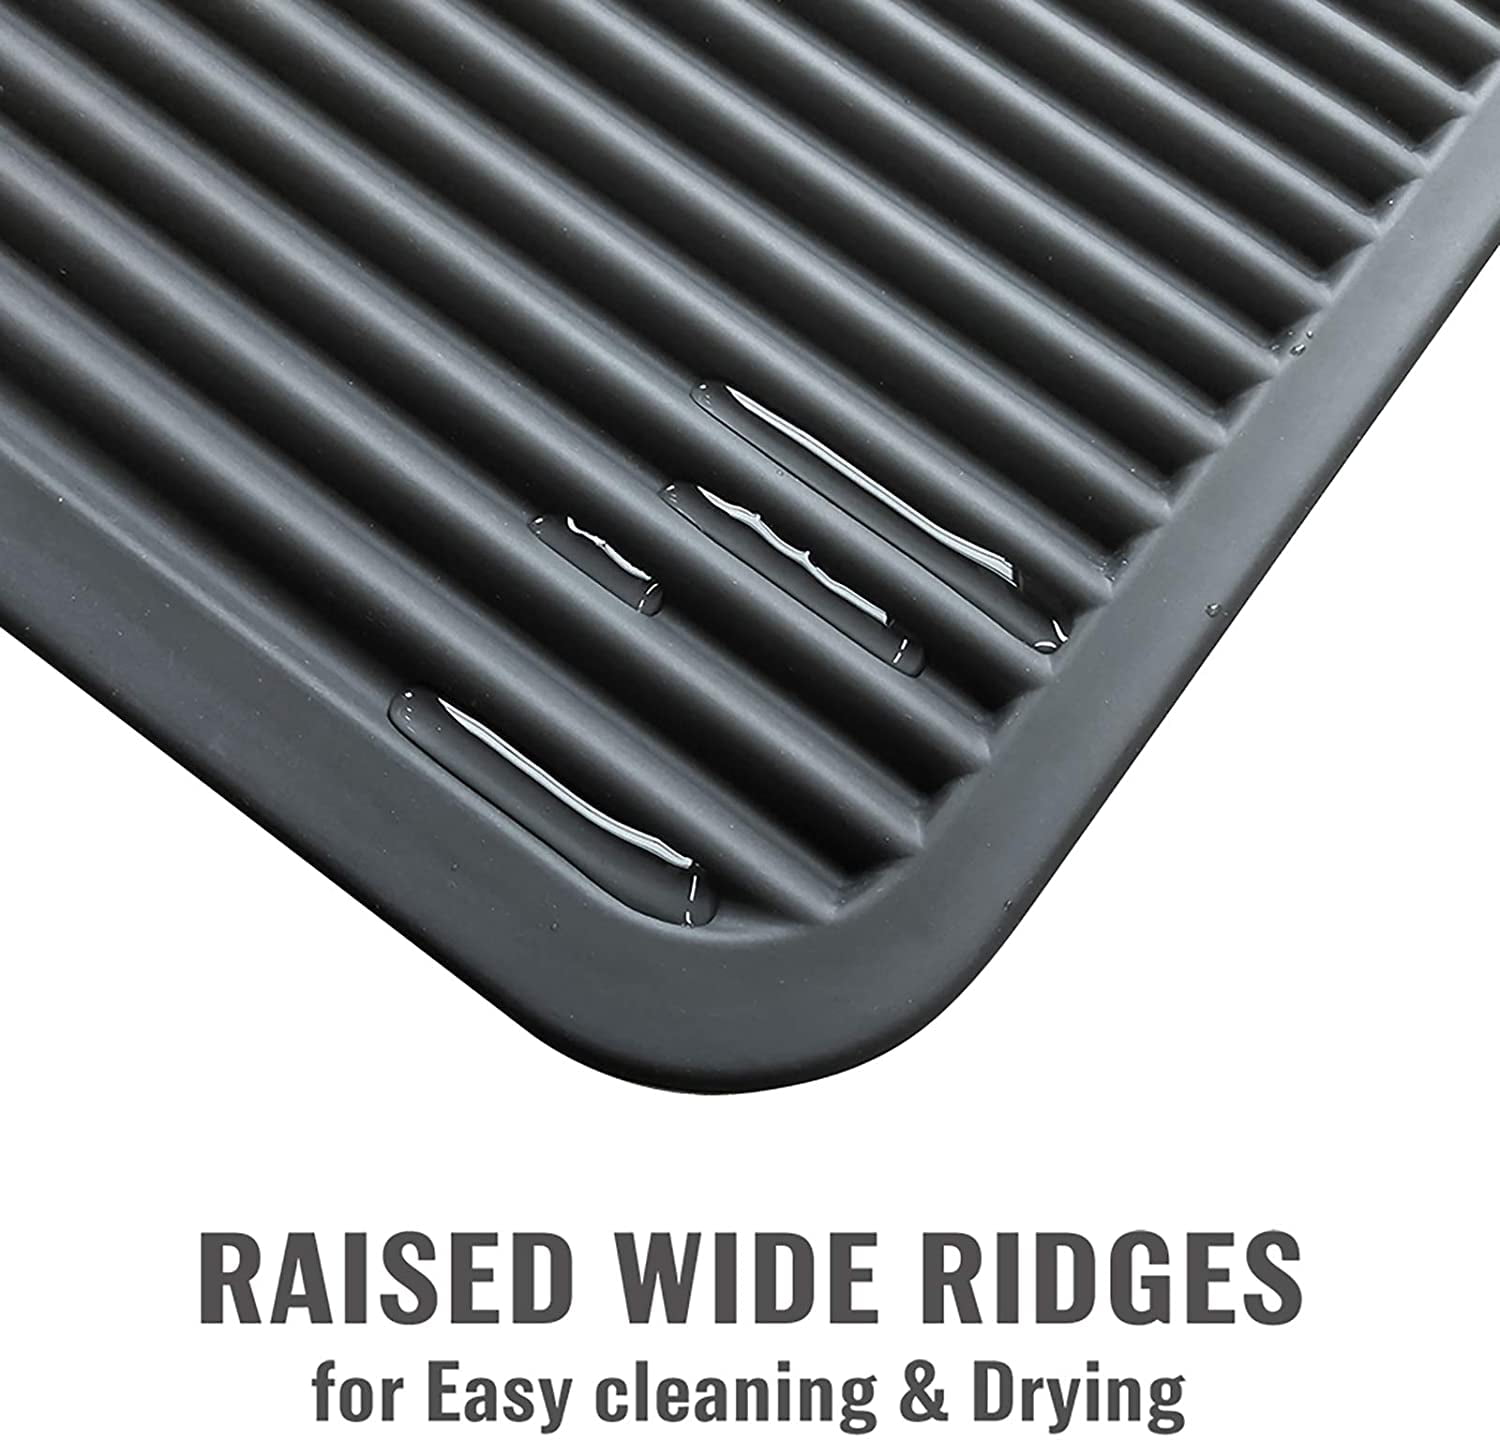 Walfos Silicone Trivets for Hot Pots and Pans - Heat Resistant Hot Pads for  Kitchen Counter- Multi-Purpose & Versatile Trivet Mat - Durable & Flexible